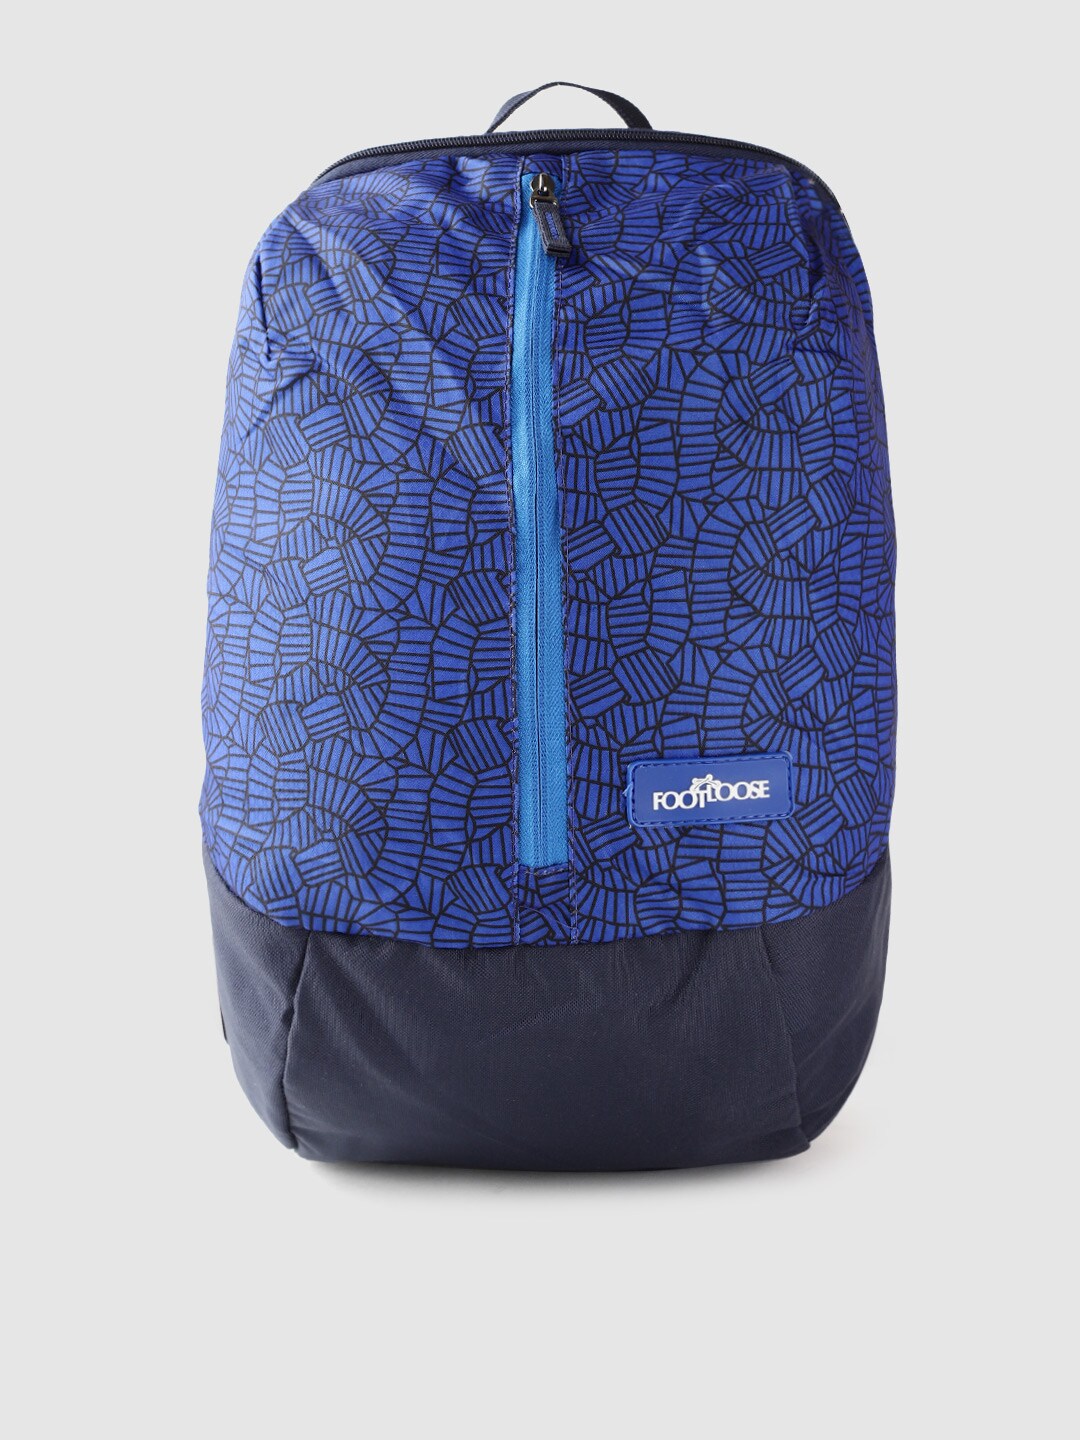 Footloose Unisex Blue & Black Geometric Backpack